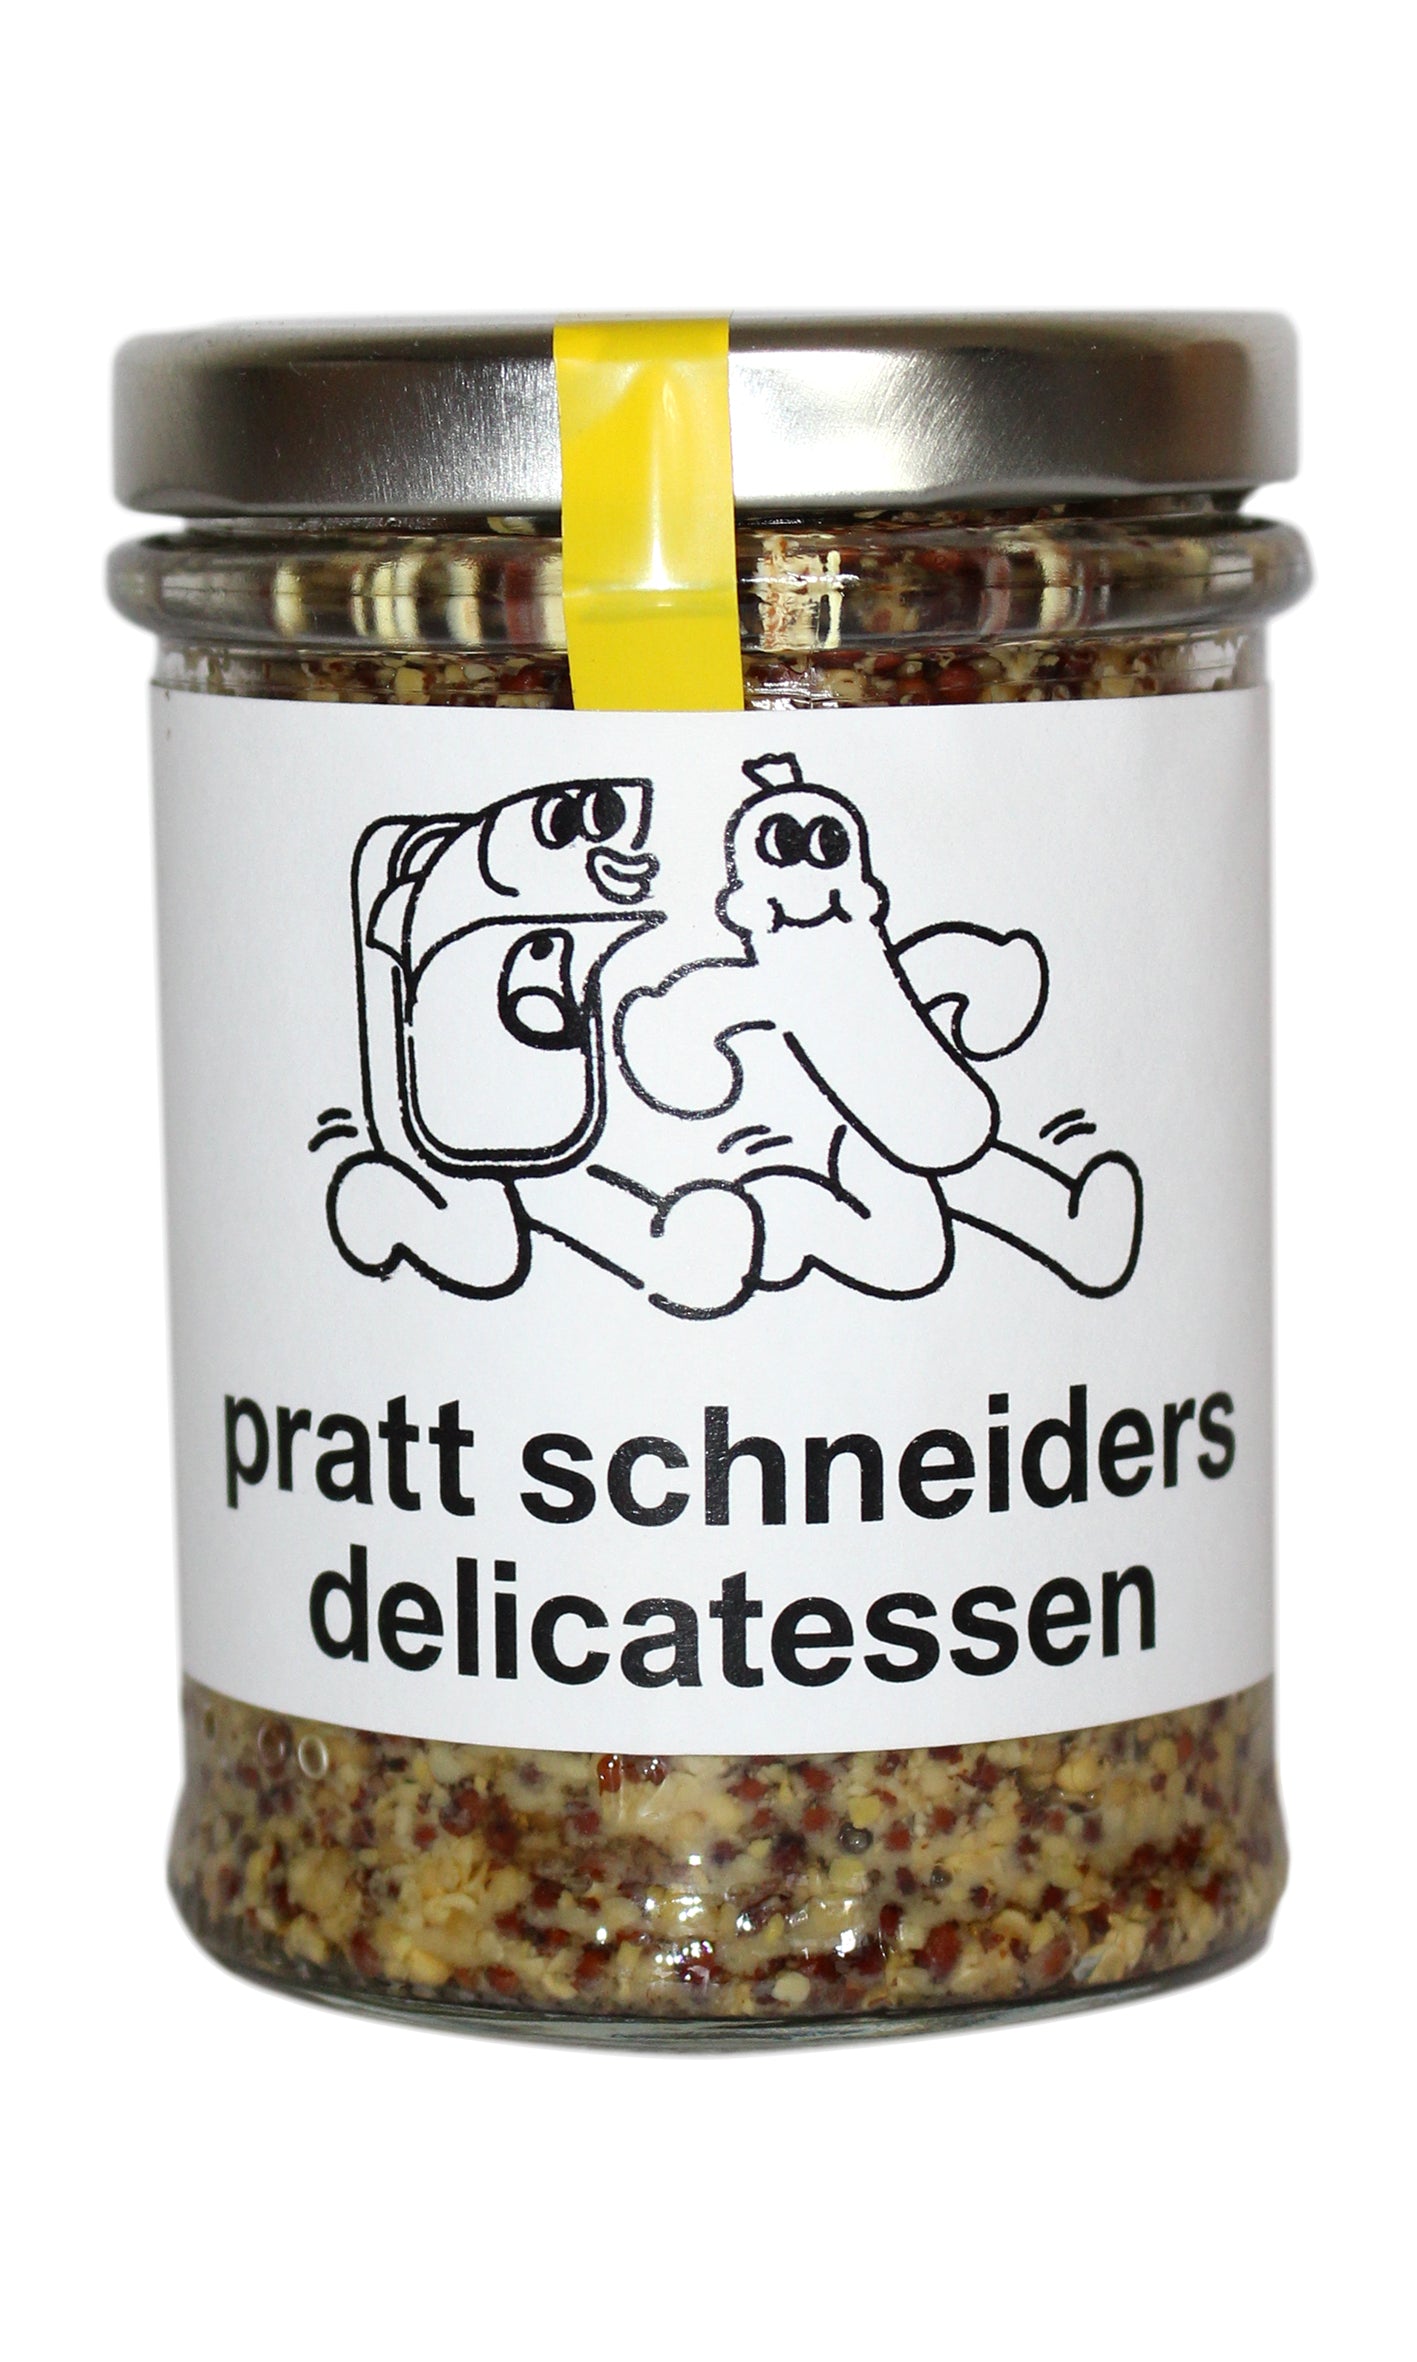 pratt schneiders - Wholegrain Mustard (200ml)